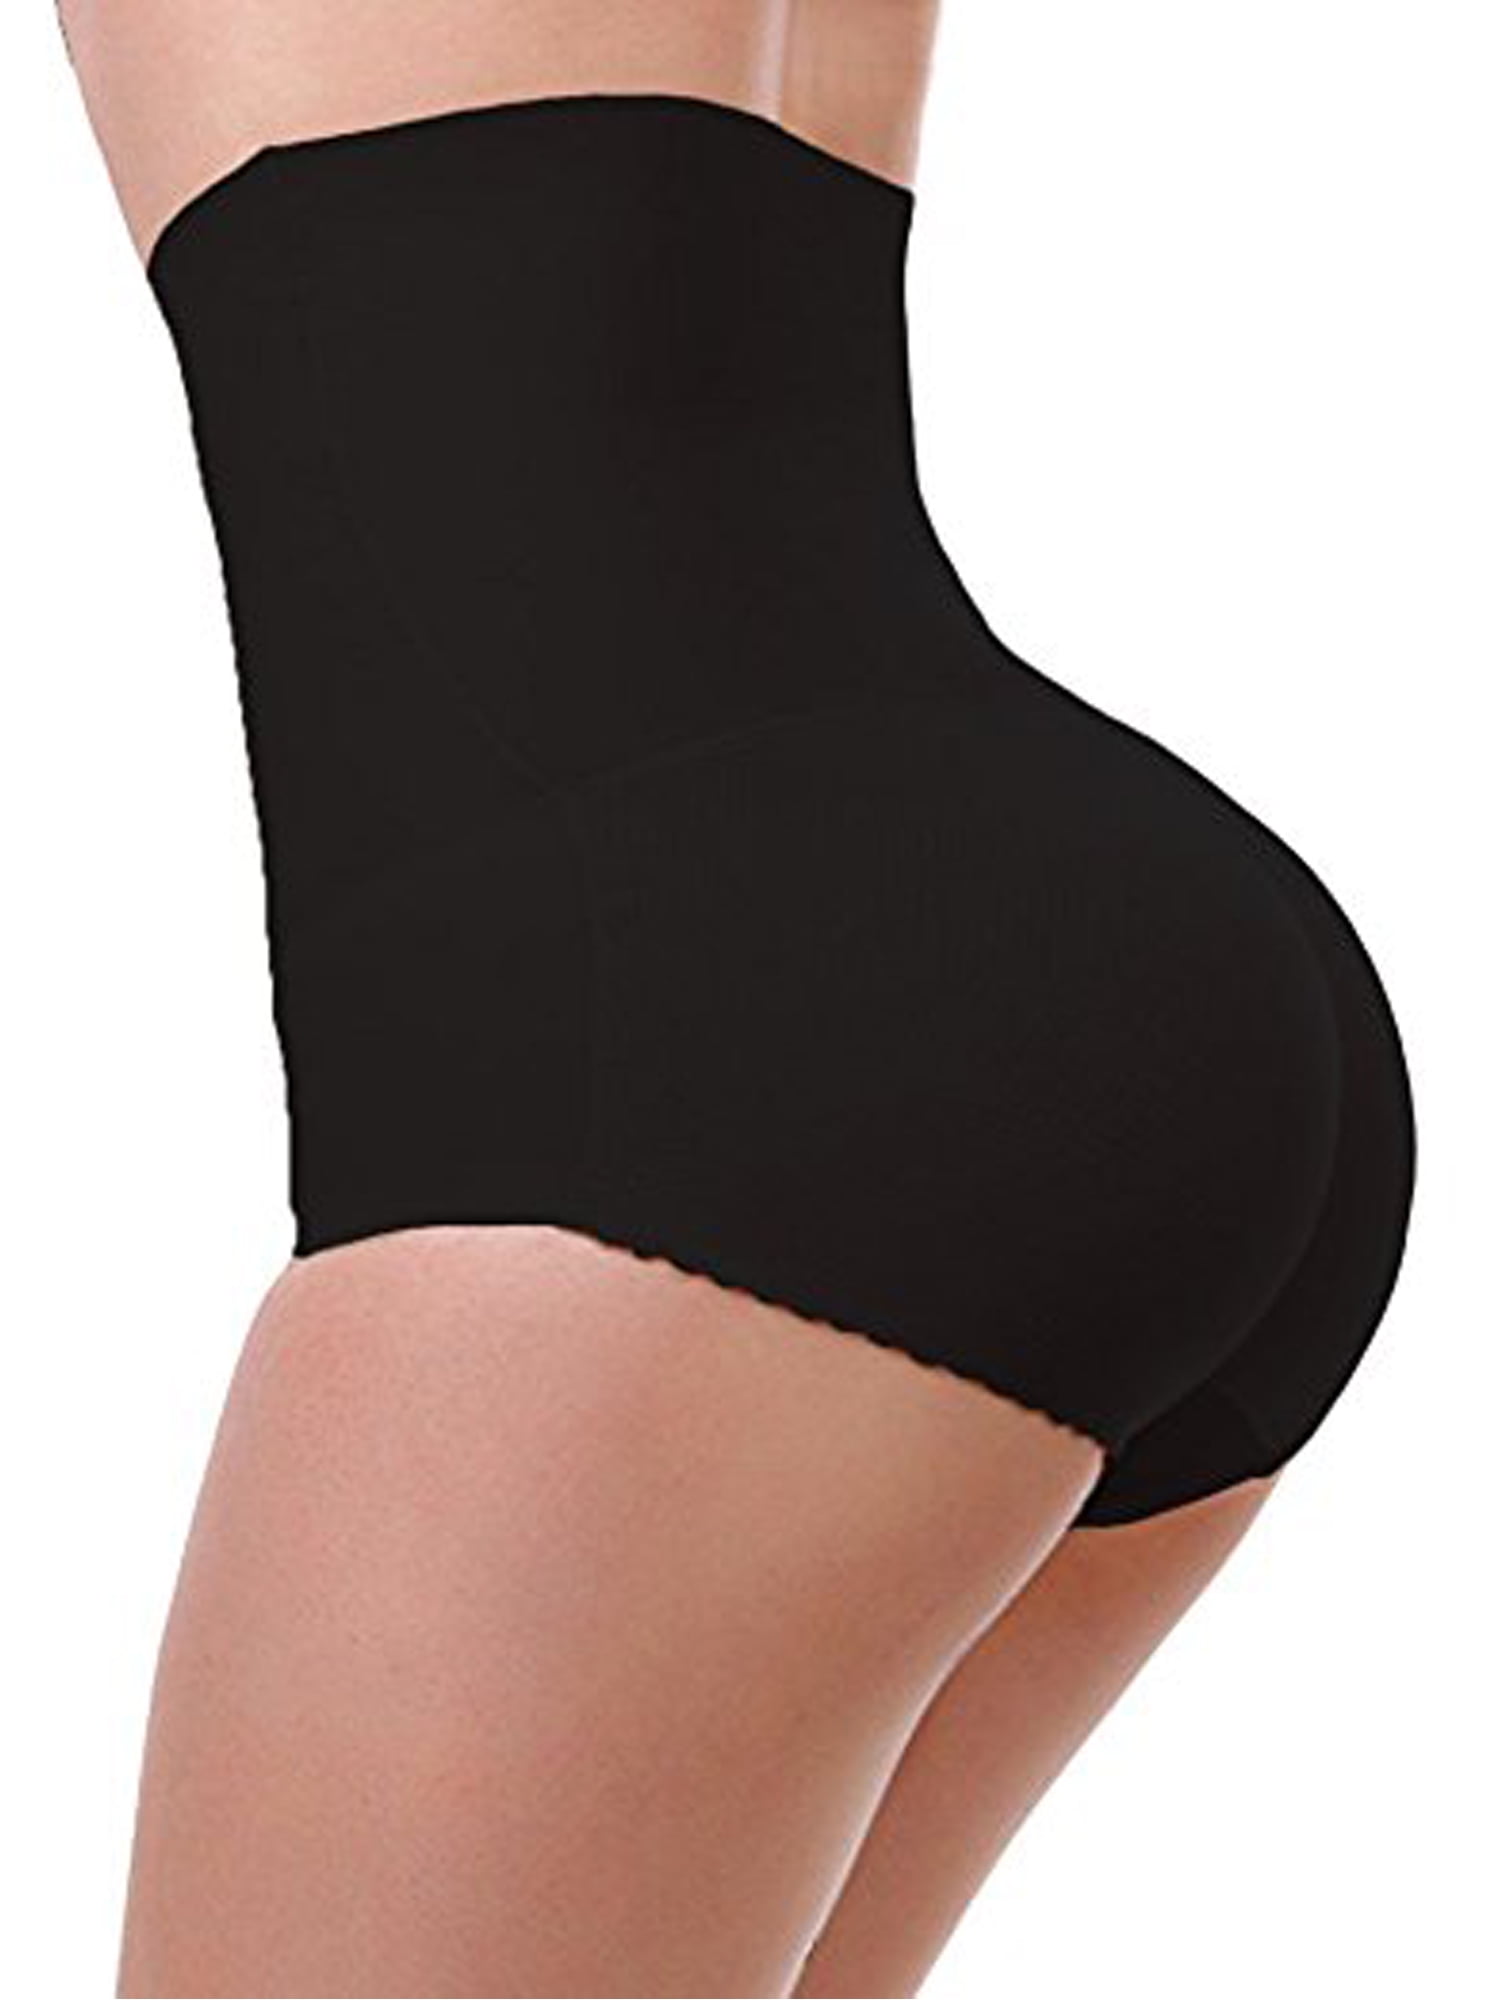 Black Fullness Air-flow Padded Panty Buttocks Enhancer Butt Booster Style Shaper #8081 